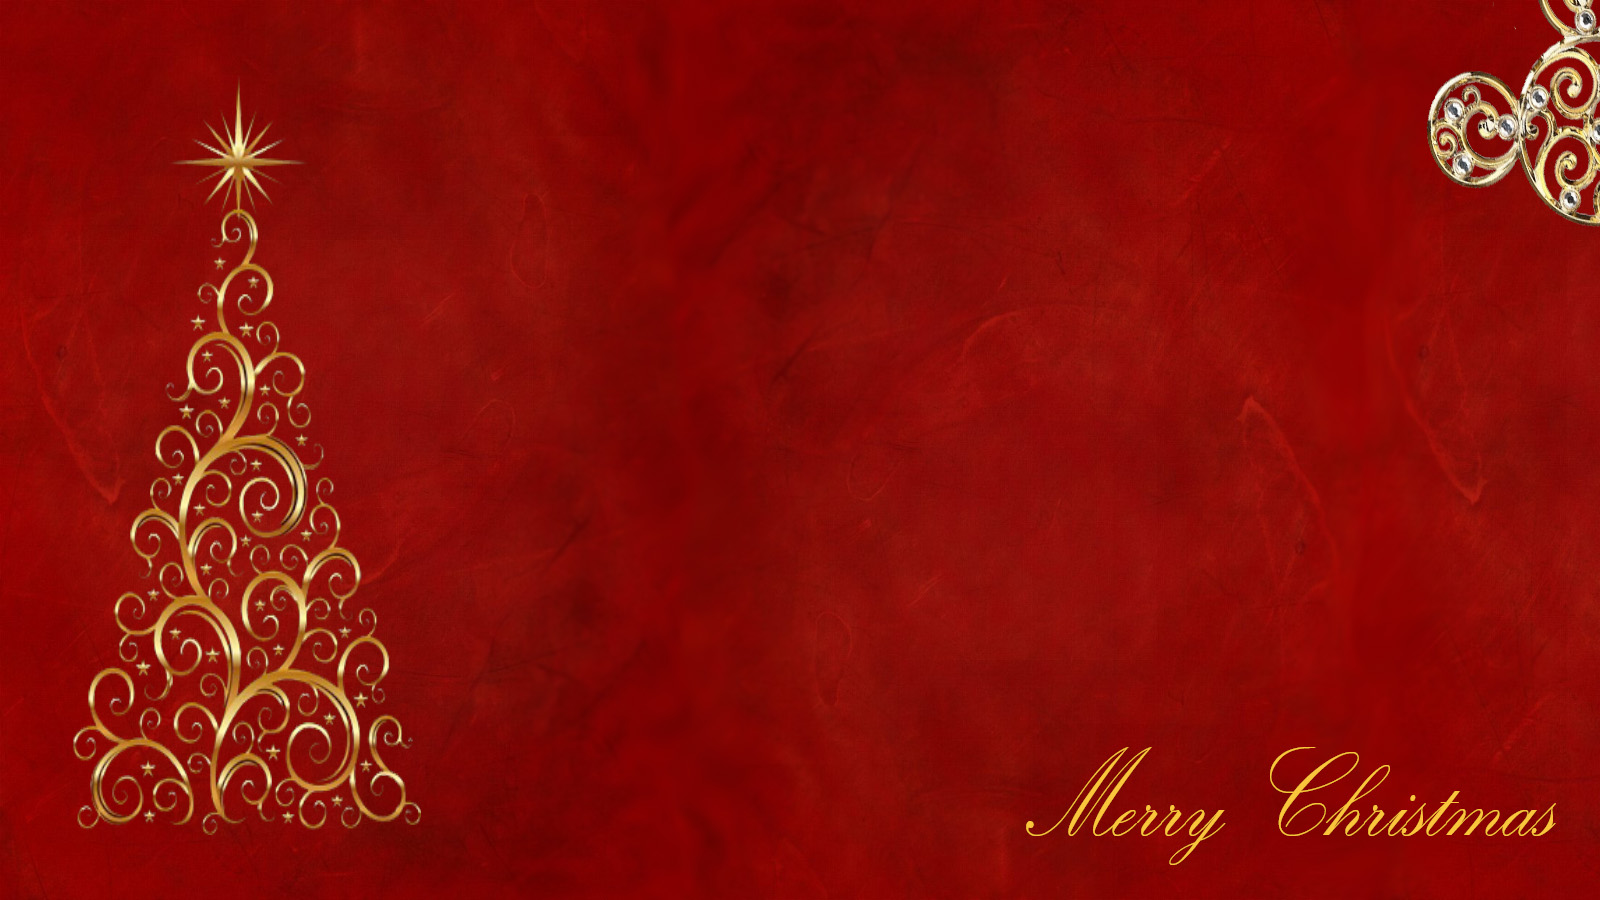 72+] Red Christmas Background - WallpaperSafari